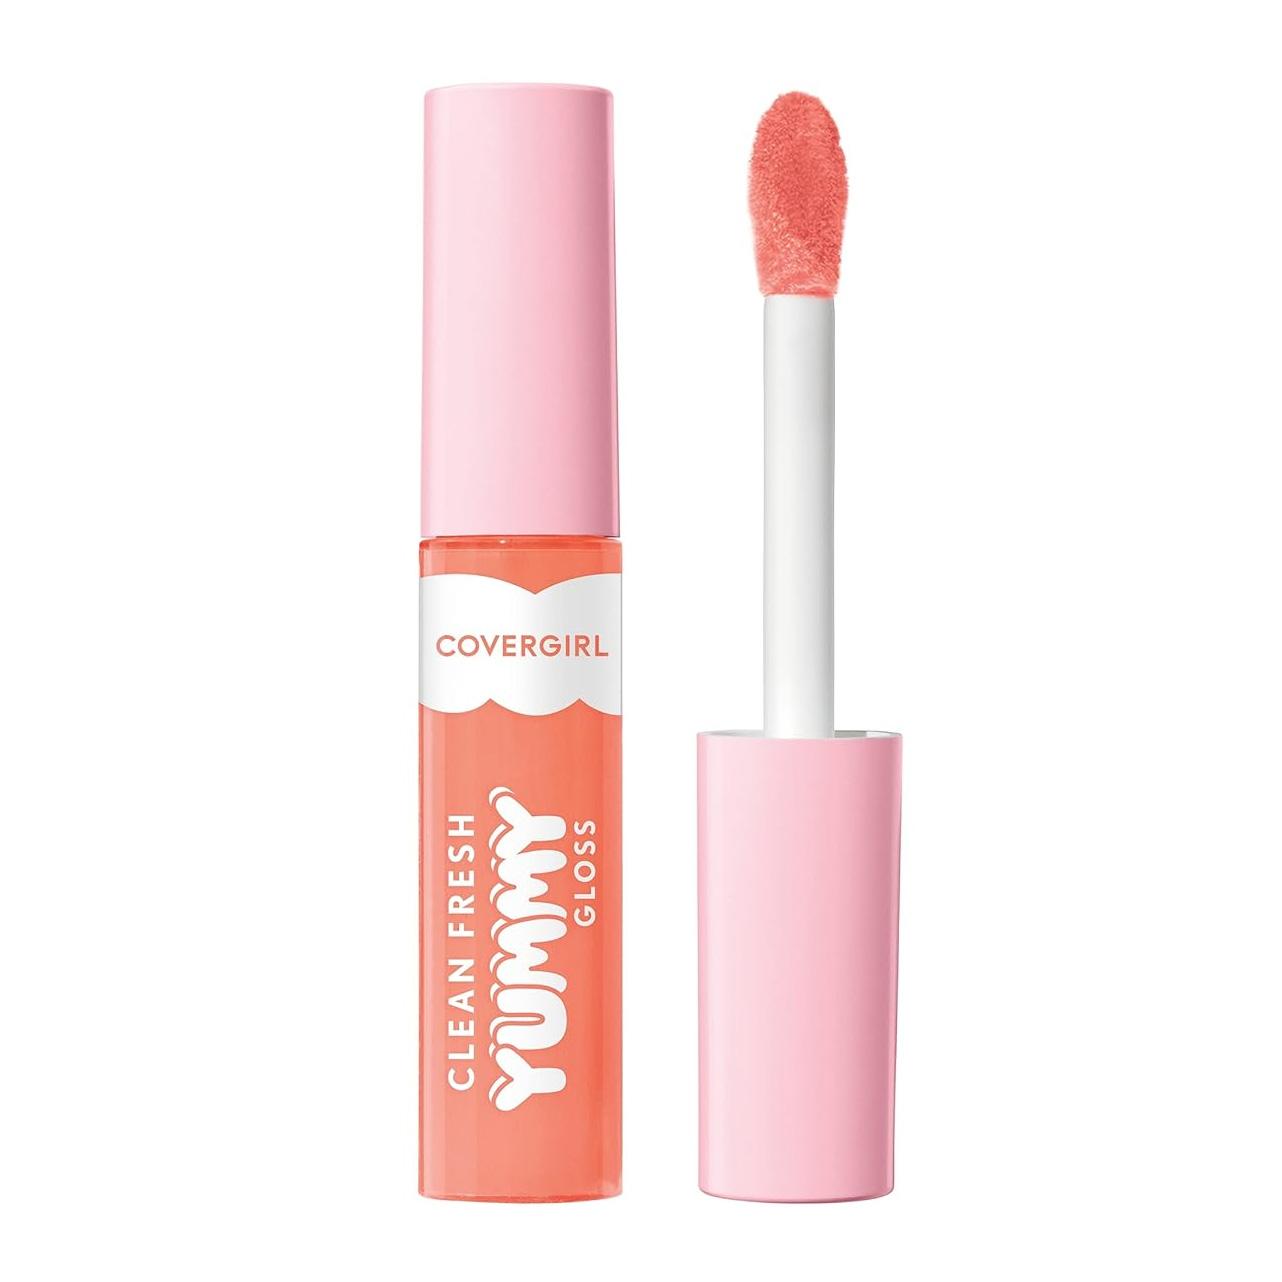 Covergirl Clean Fresh Yummy Lip Gloss Peach Out for $2.99